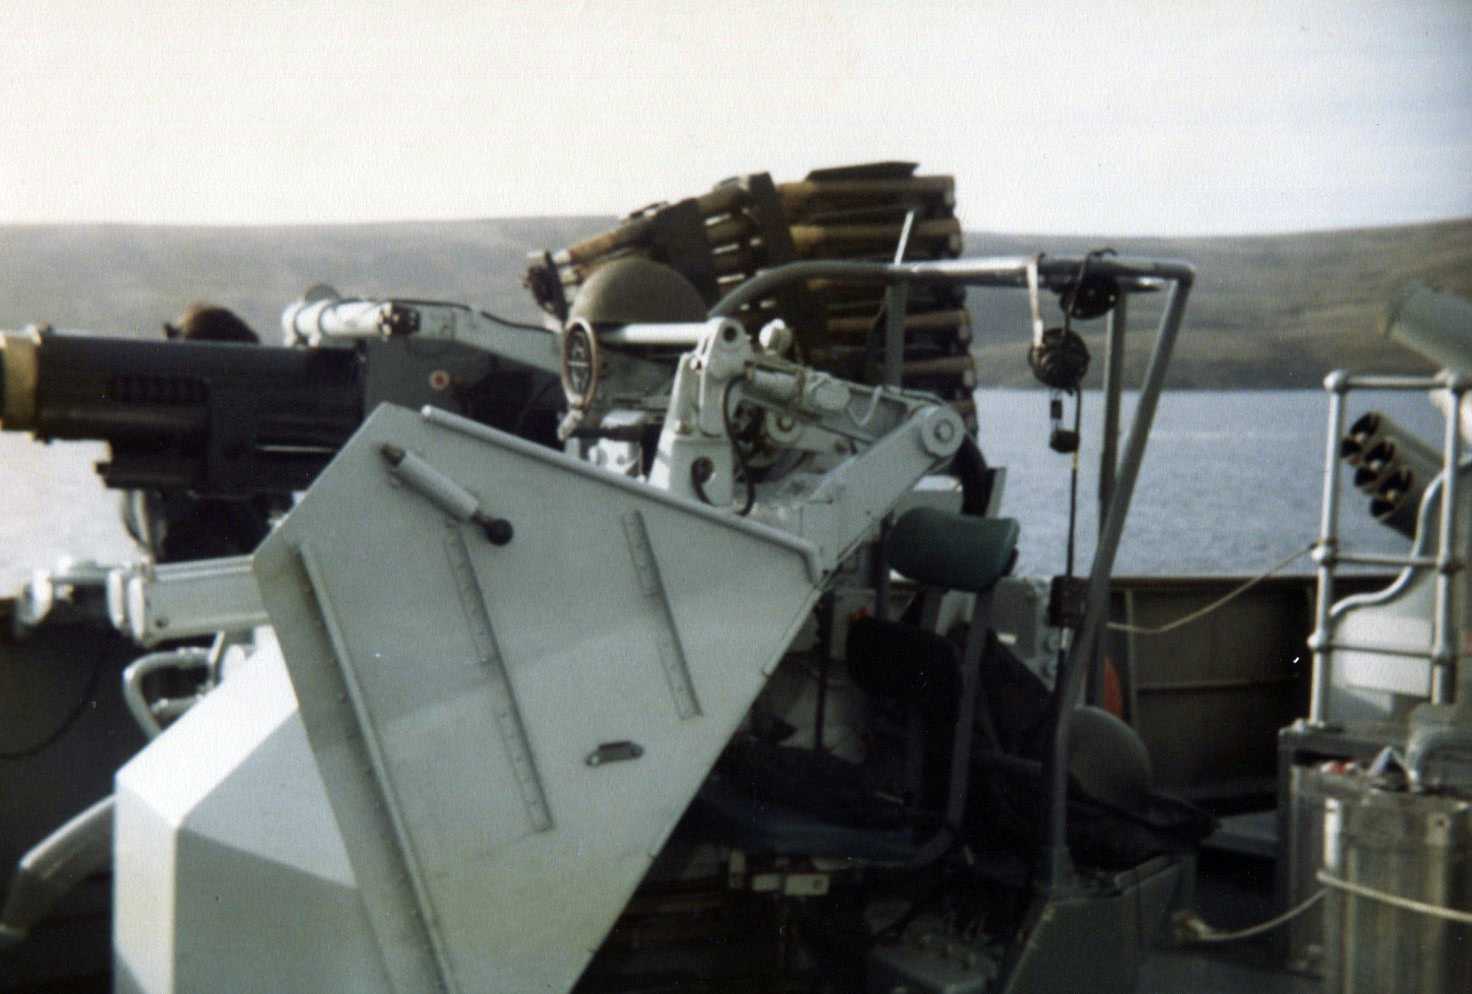 my Bofors gun onboard HMS Intrepid